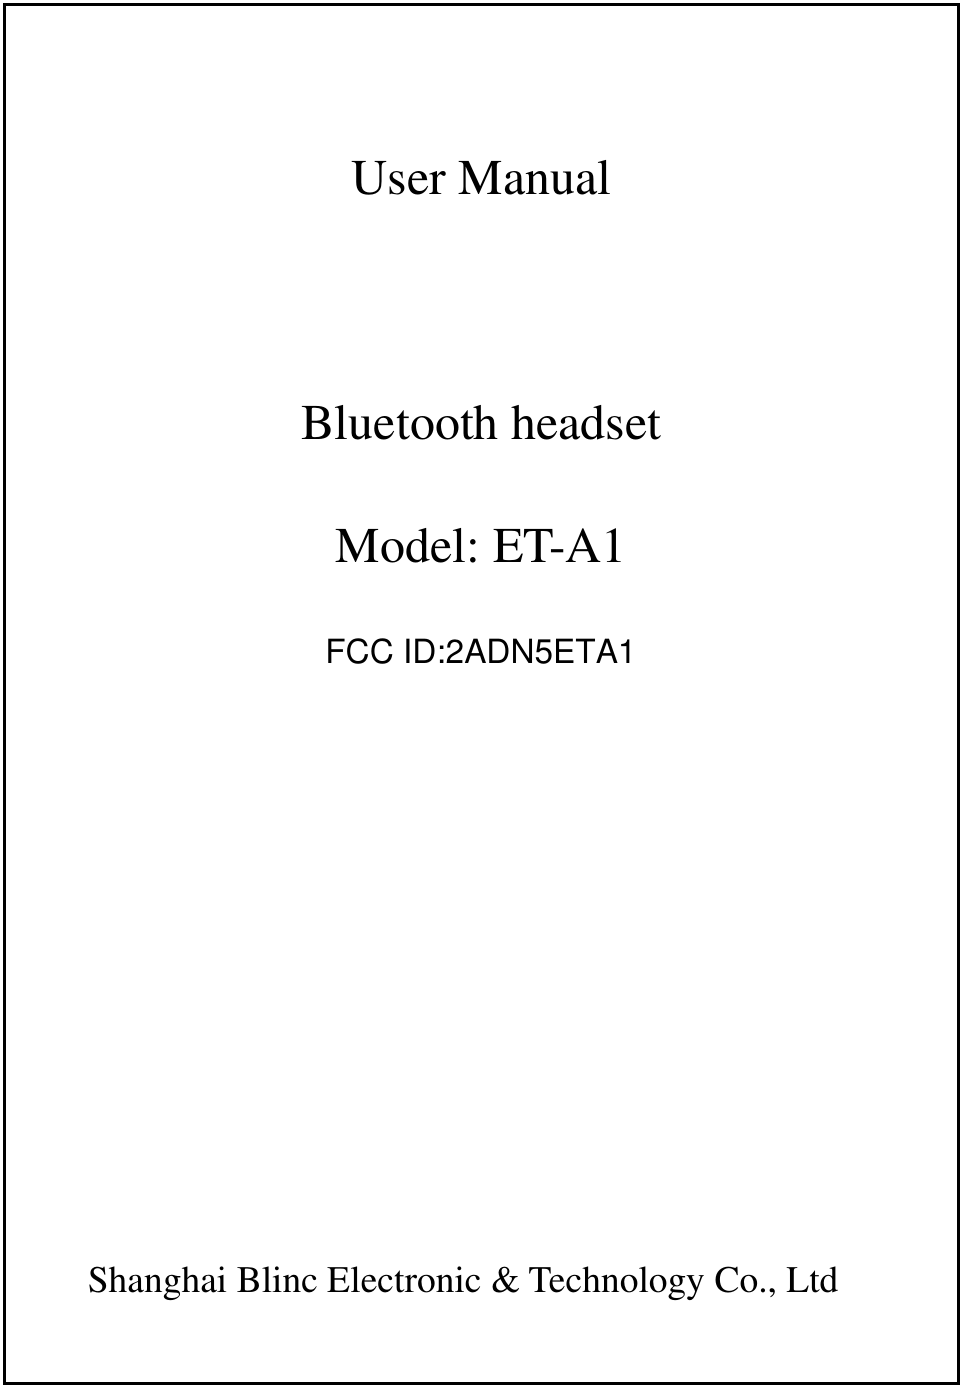   User Manual  Bluetooth headset Model: ET-A1        Shanghai Blinc Electronic &amp; Technology Co., Ltd FCC ID:2ADN5ETA1